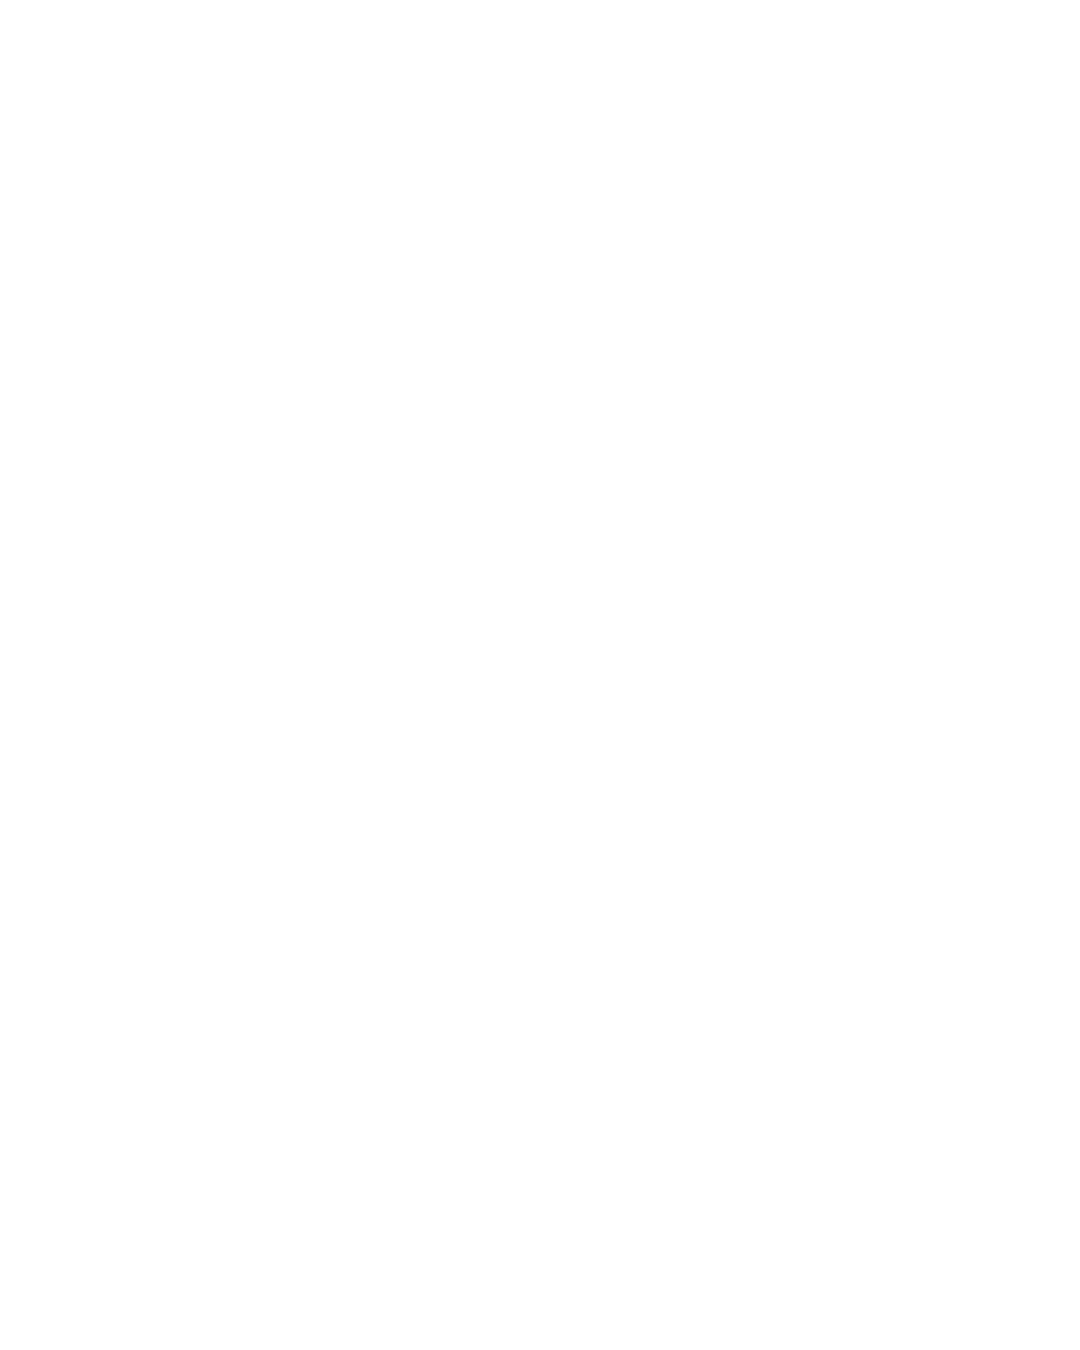 Foundation 55 brand logo